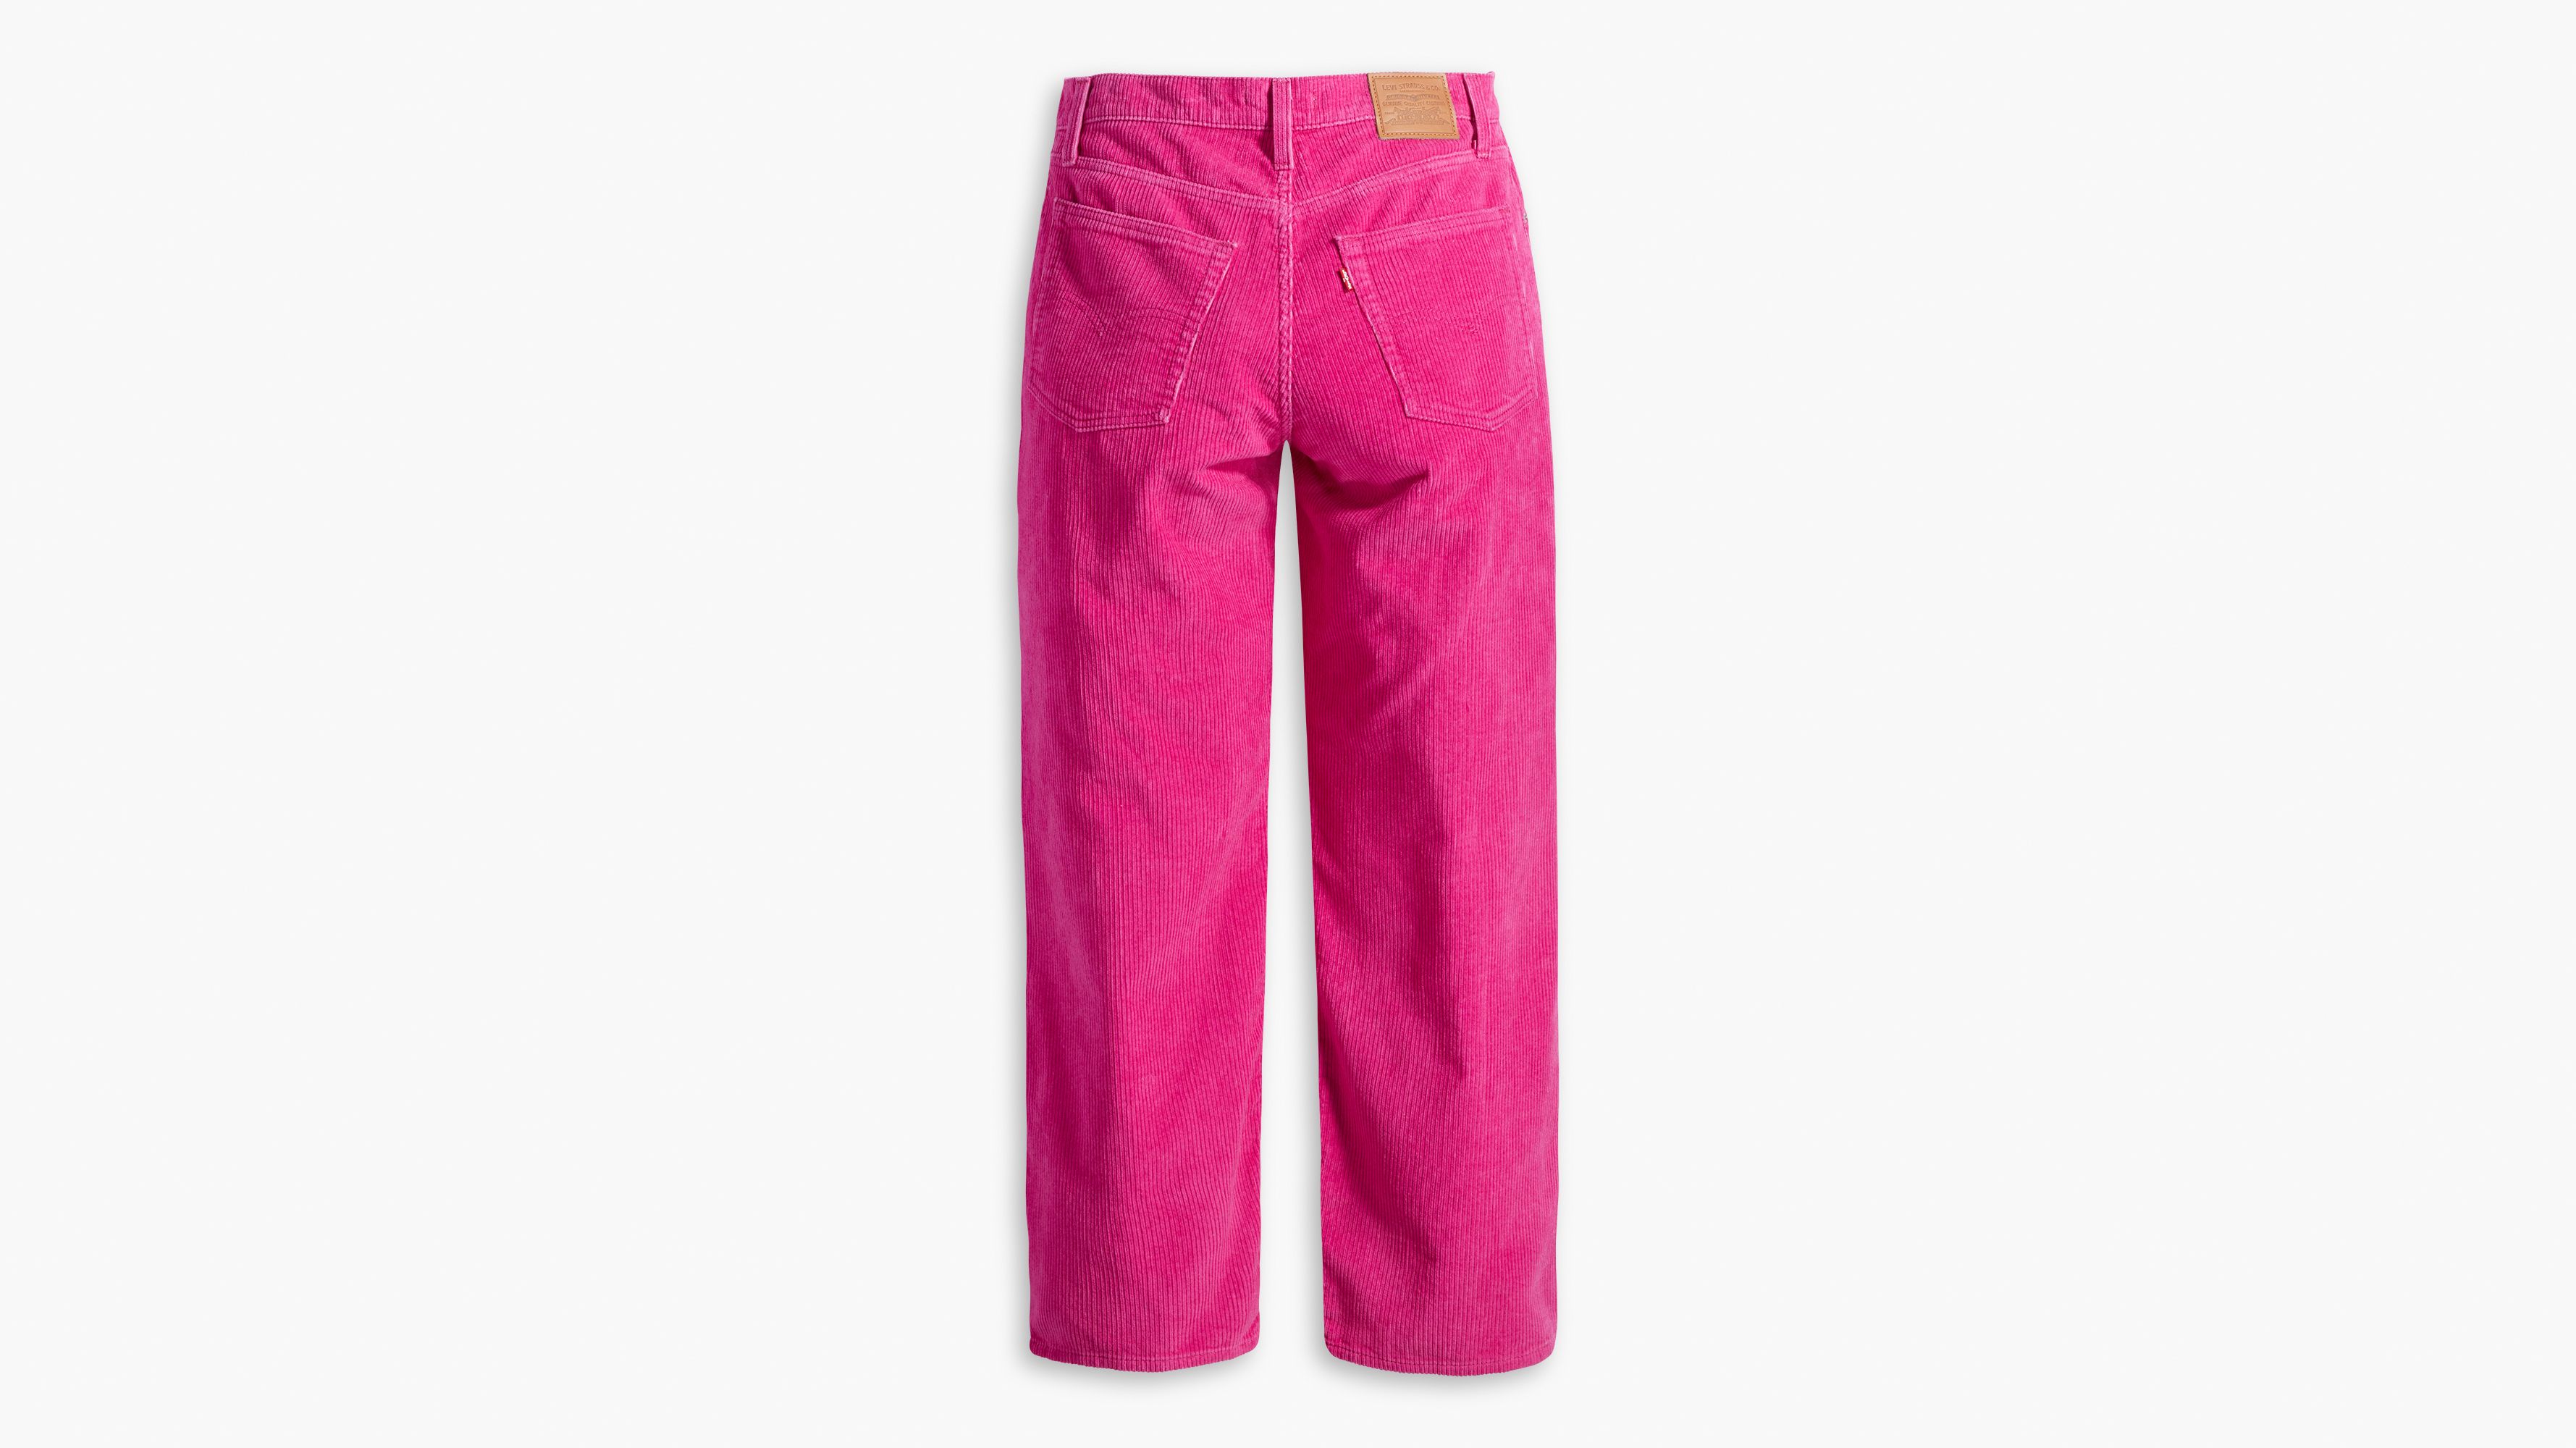 MEXX Pink Corduroy Pants W32 L34 Vintage 90's High Waist Spring